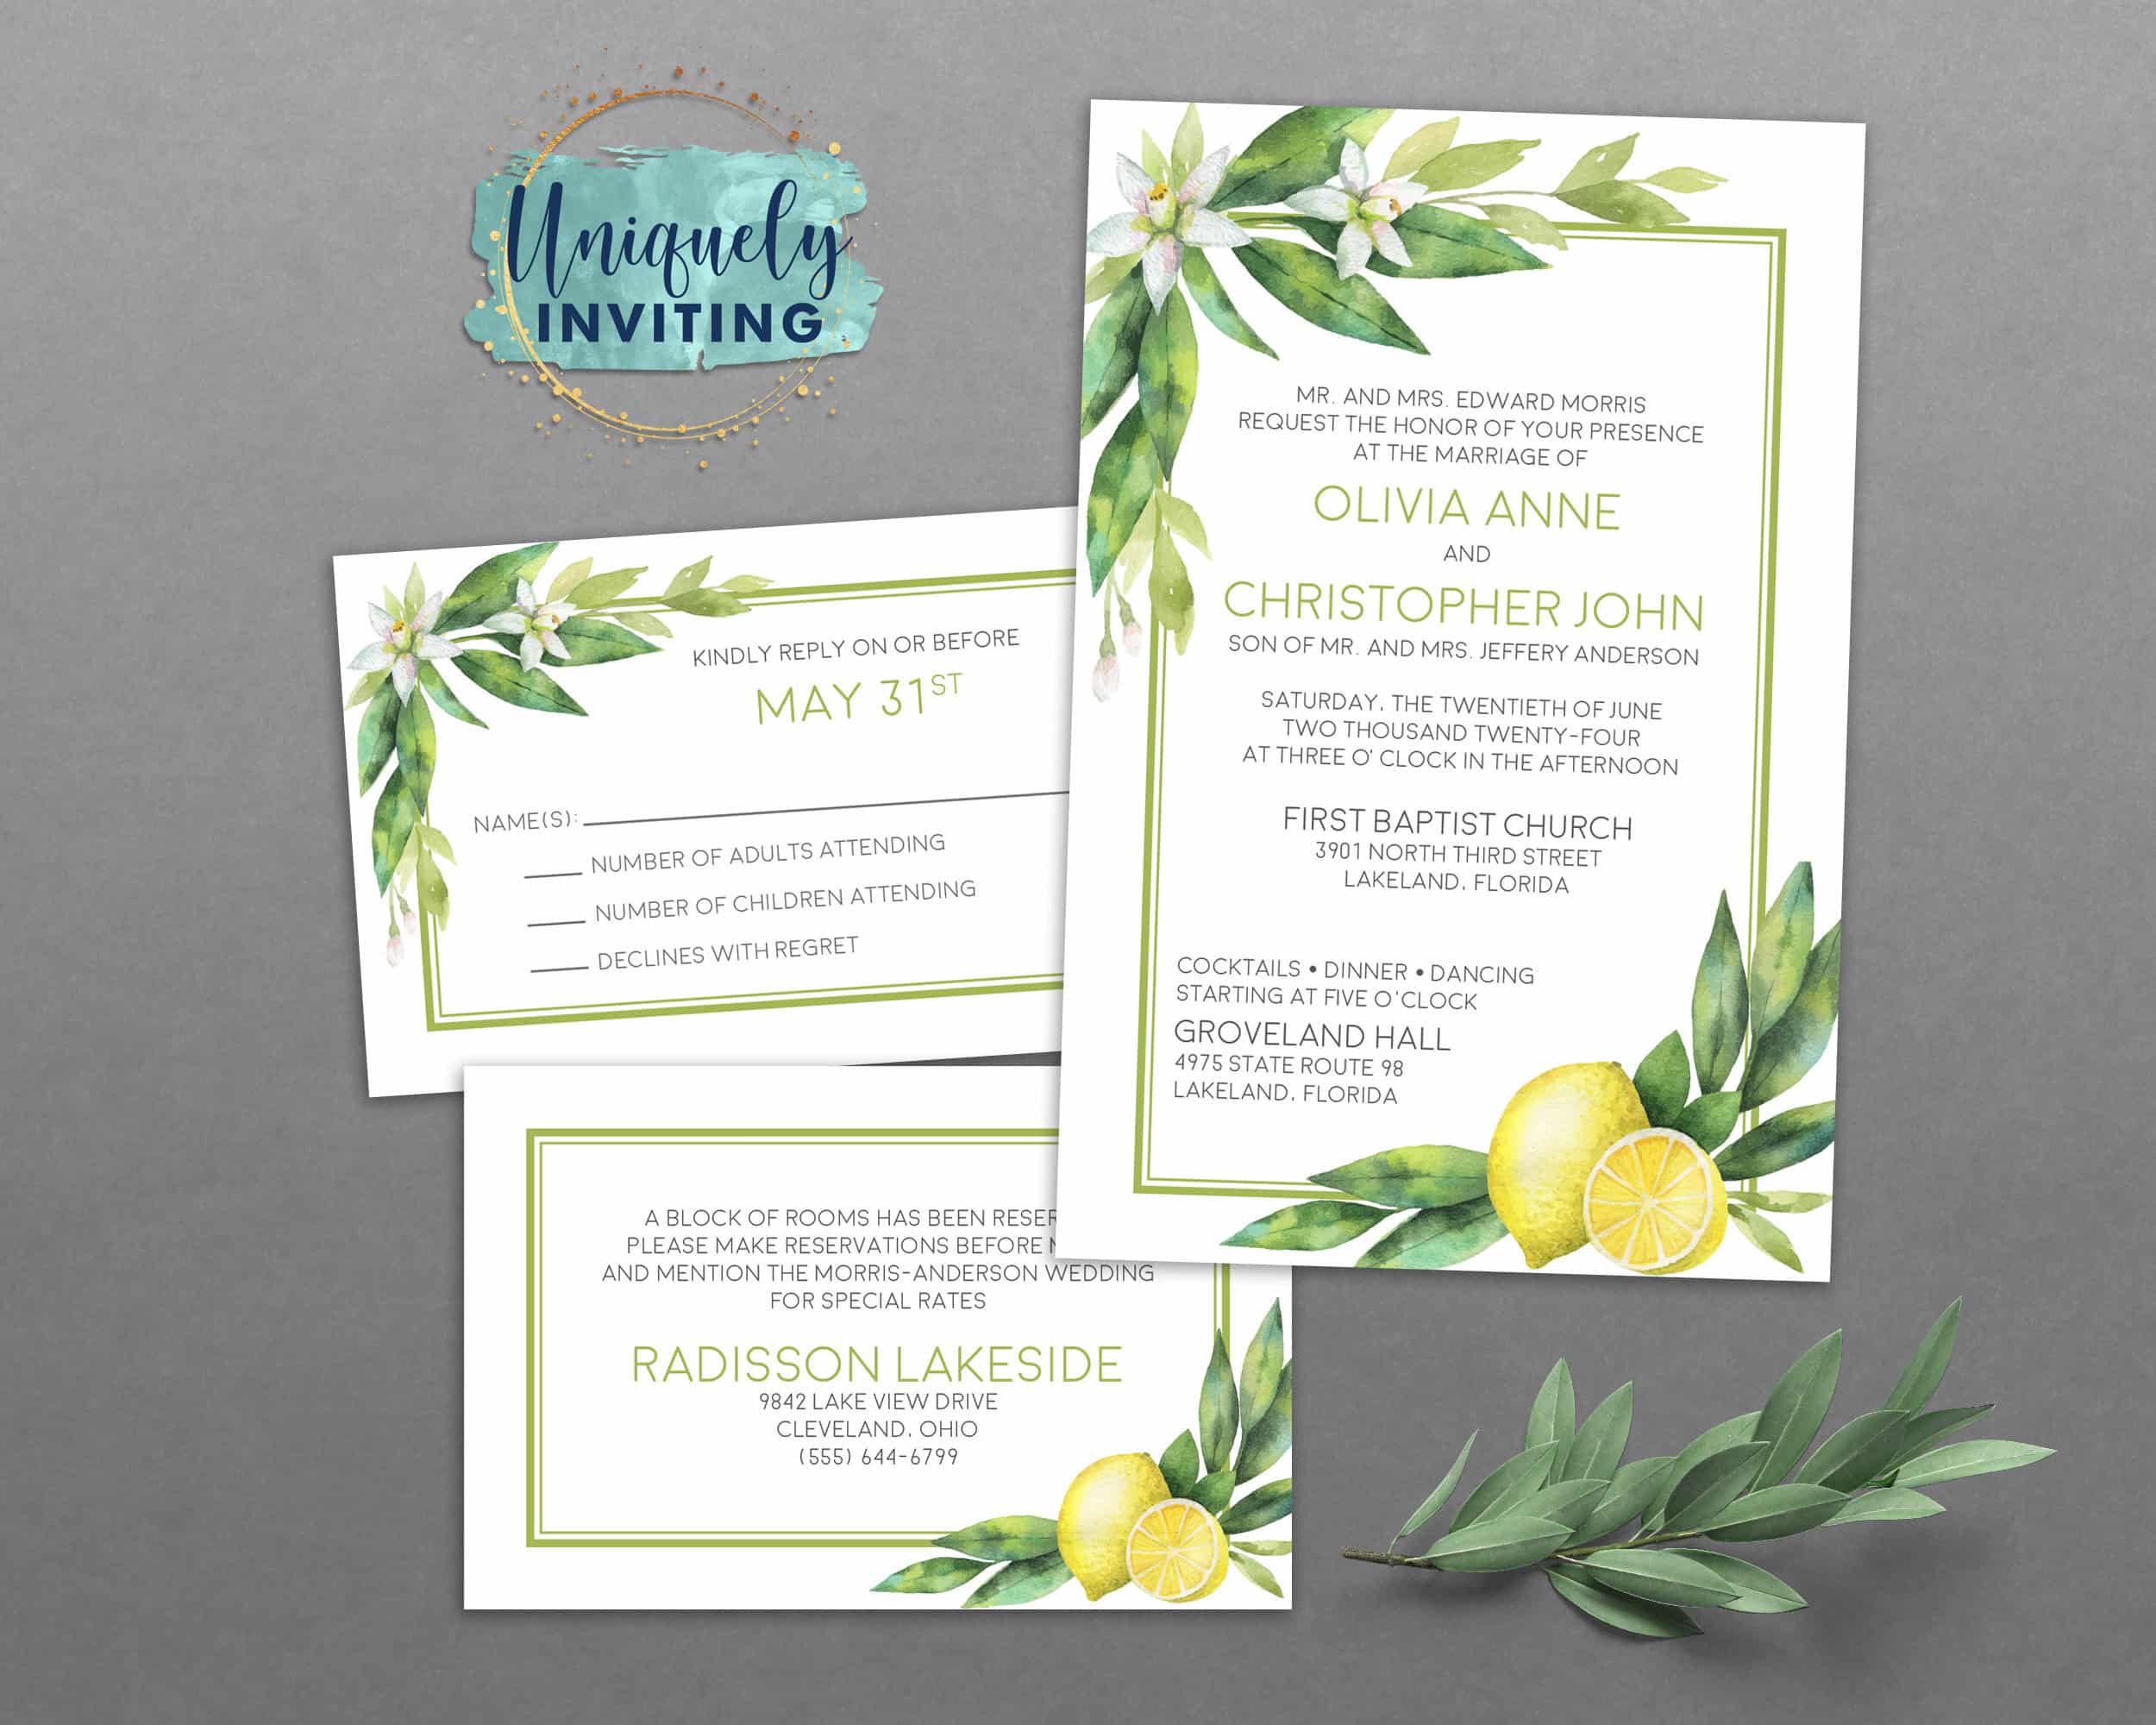 Traditional wedding invites - LemonWedding